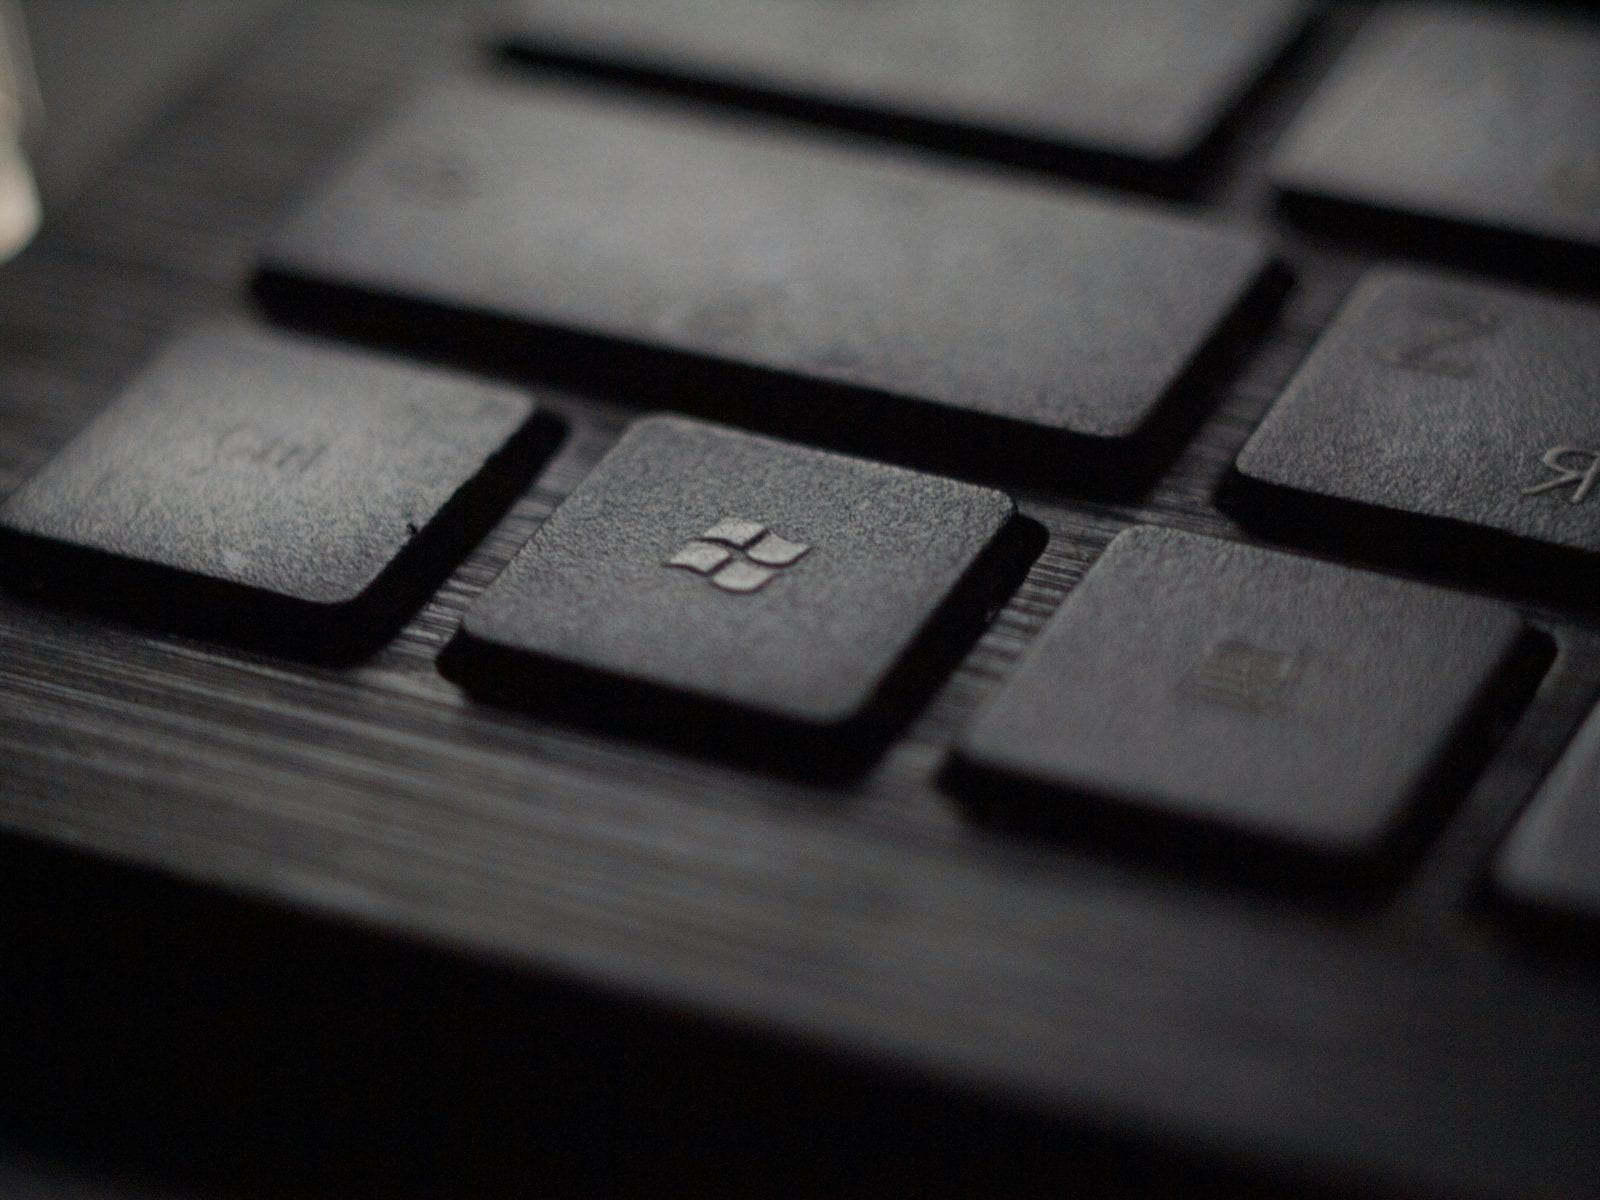 Key on keyboard shows windows icon